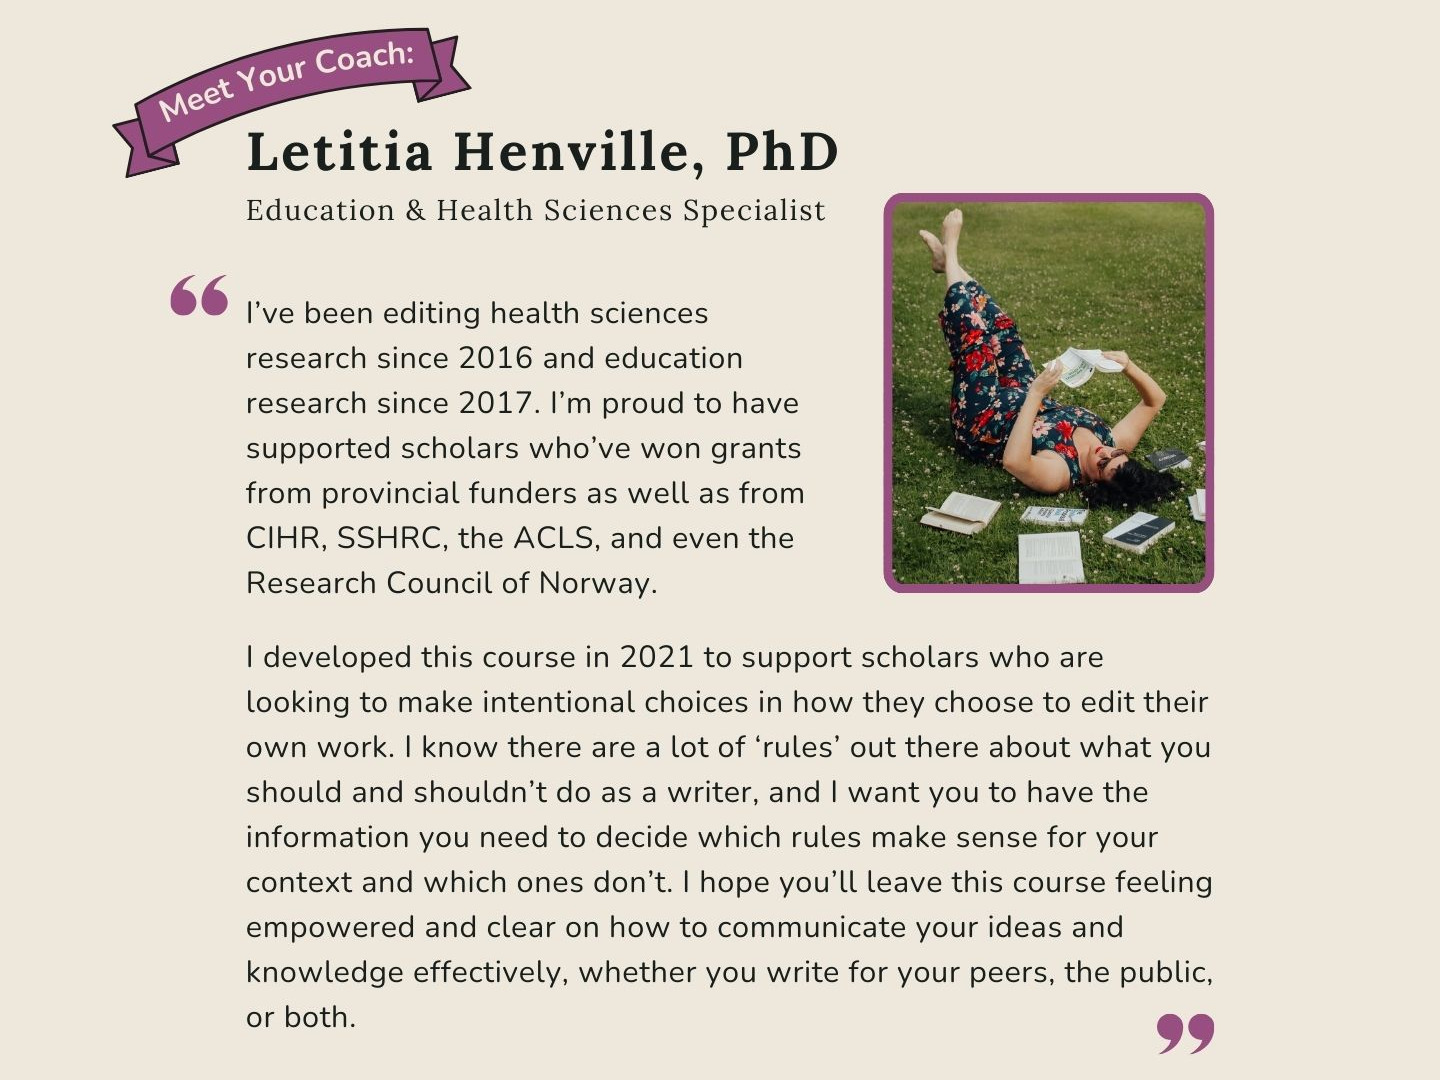 Meet Your Coach: Letitia Henville, PhD